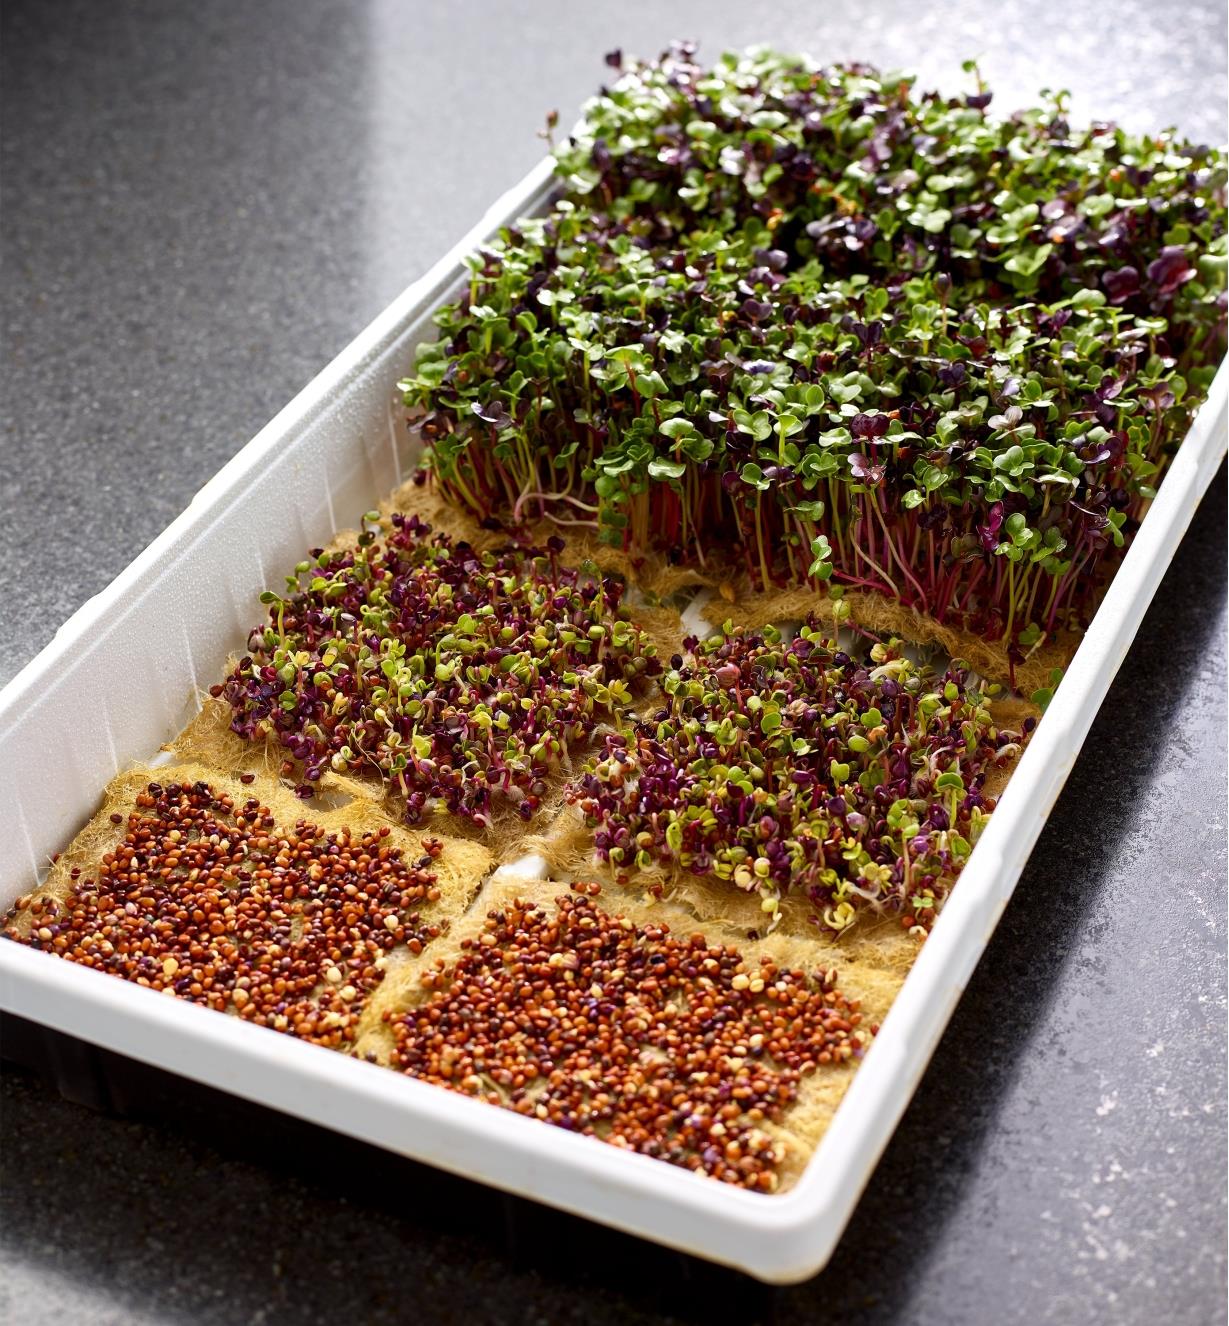 Terrafibre Hemp Grow Mat Fully Biodegradable Perfect,40 Pack 5" x 5" 